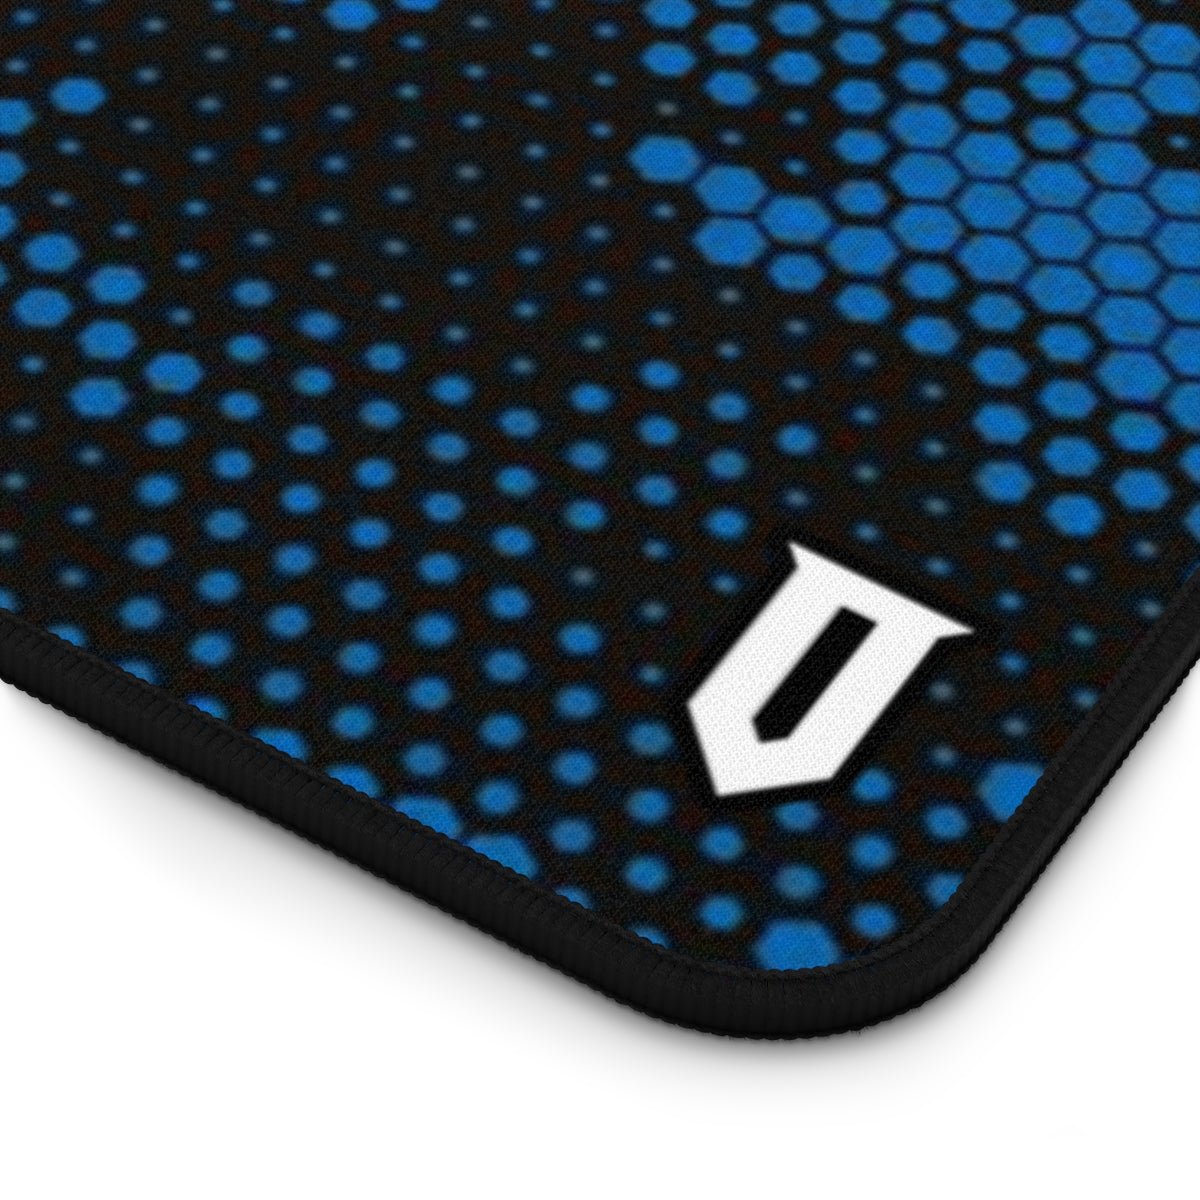 Blue Hexagonal Camo Mousepad - Optimus